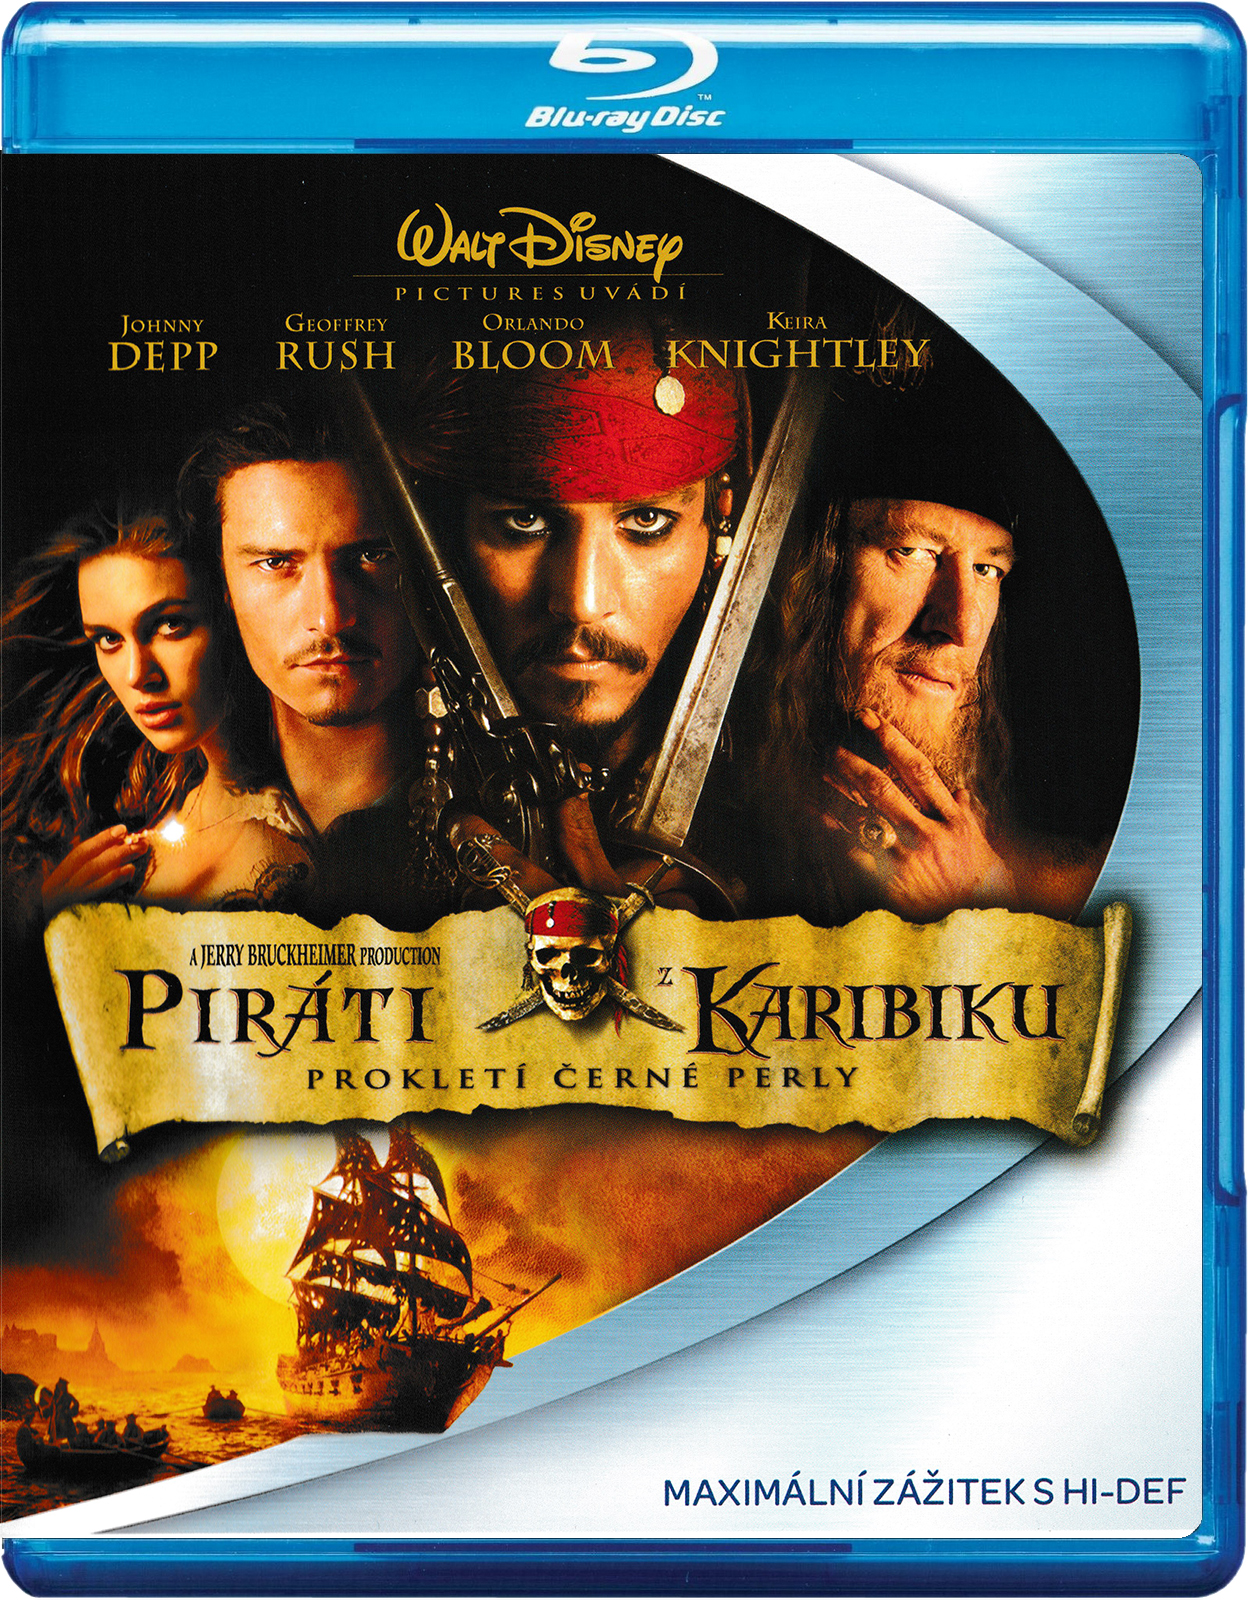 Stiahni si HD Filmy Pirati z Karibiku: Prokleti Cerne perly/ Pirates of the Caribbean: The Curse of the Black Pearl (2003)(CZ/EN)[1080pHD] = CSFD 84%